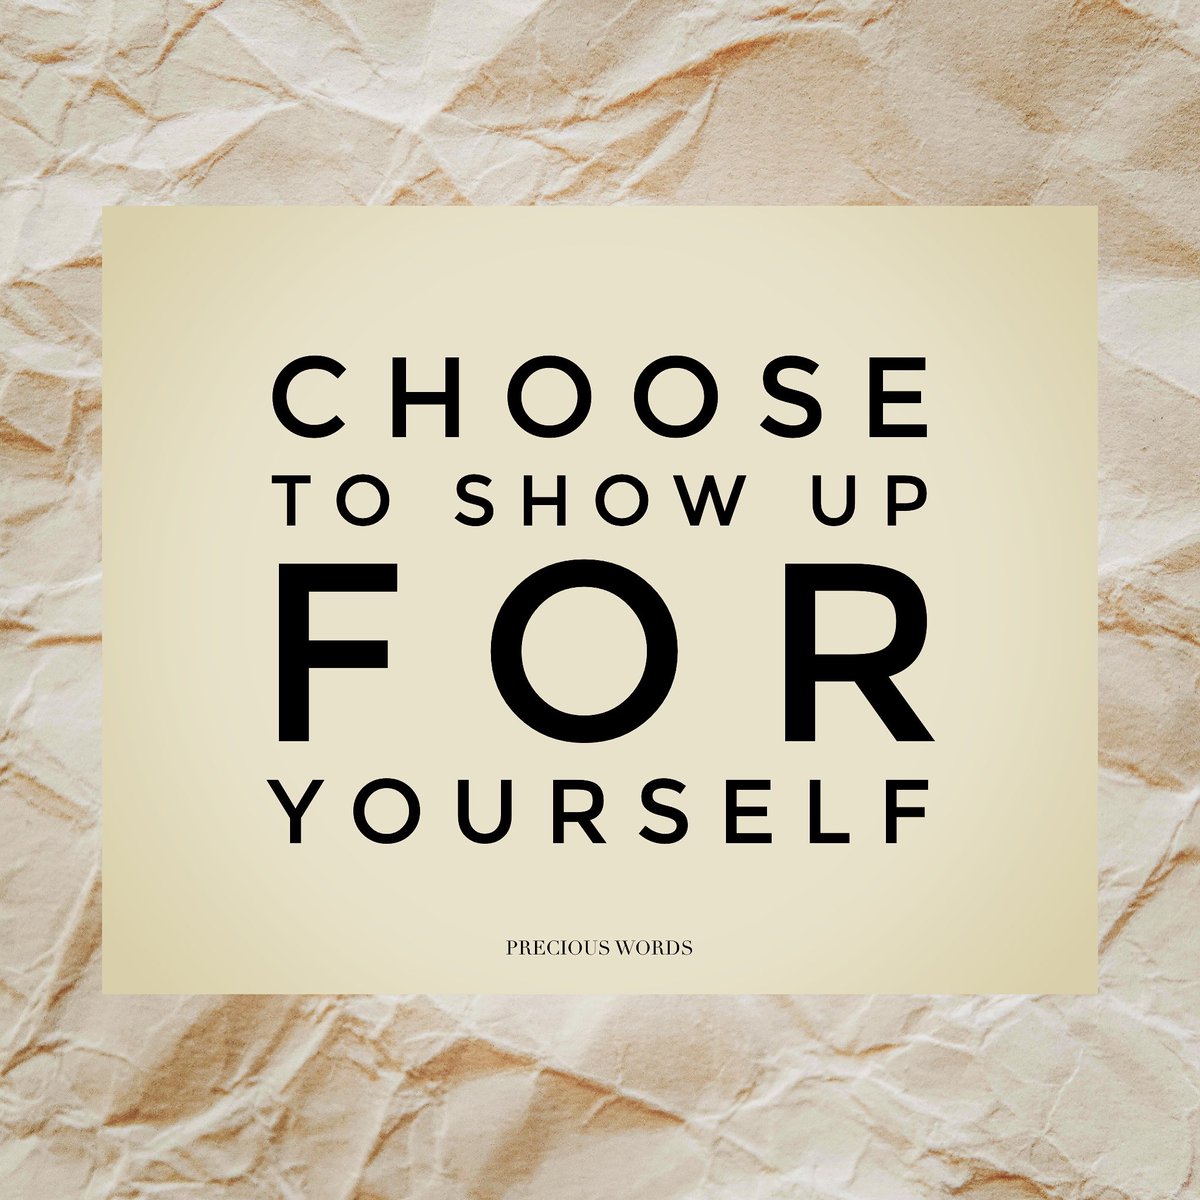 Choose to show up for yourself.
#choosetoshowup #chooseyourself #choosetobehappy #showupforyourself #preciouswords #preciouswordsoflife